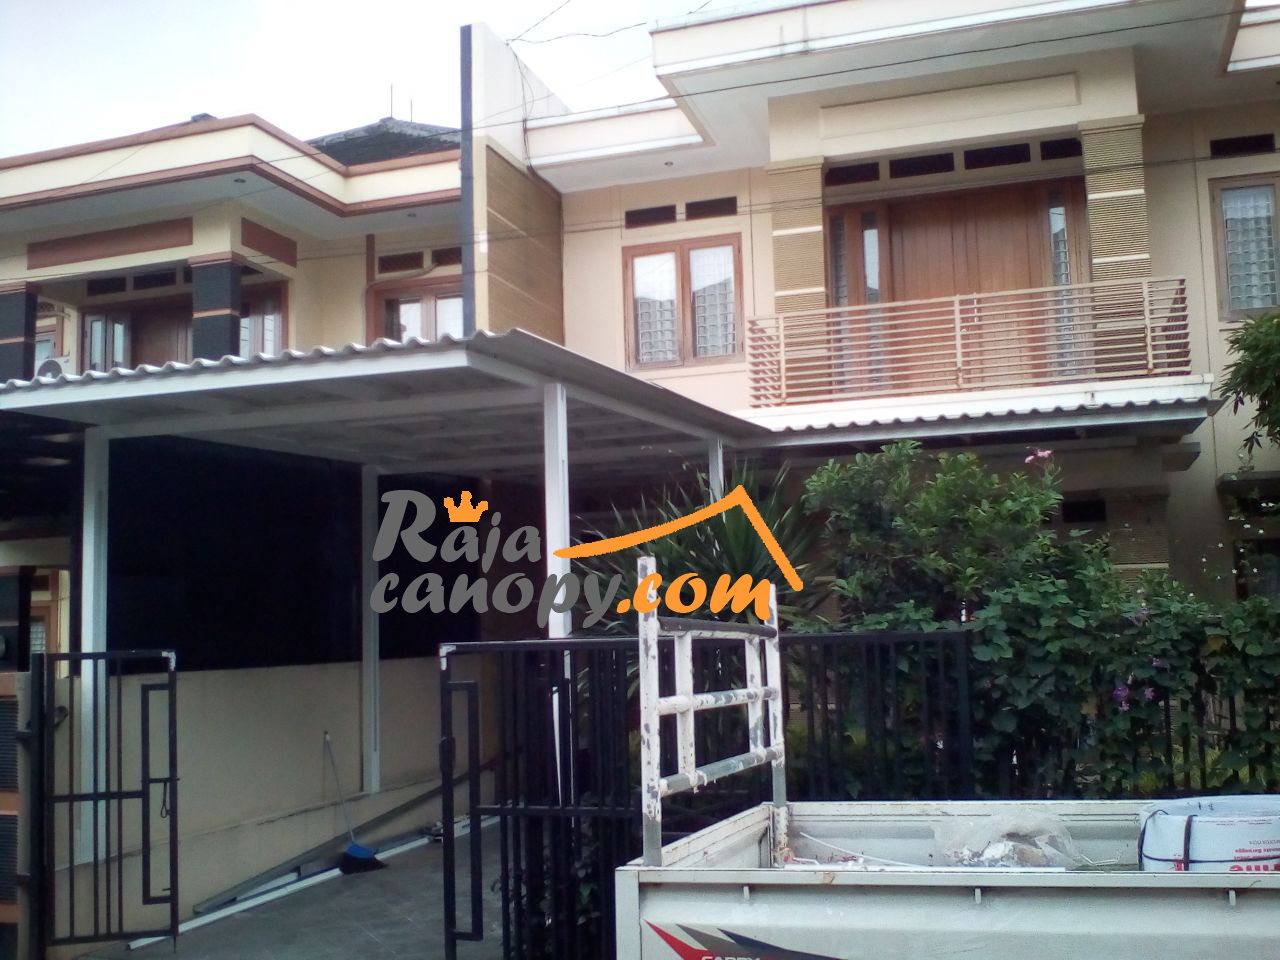 Rajacanopycom Jasa Pasang Canopy Baja Ringan Berkualitas